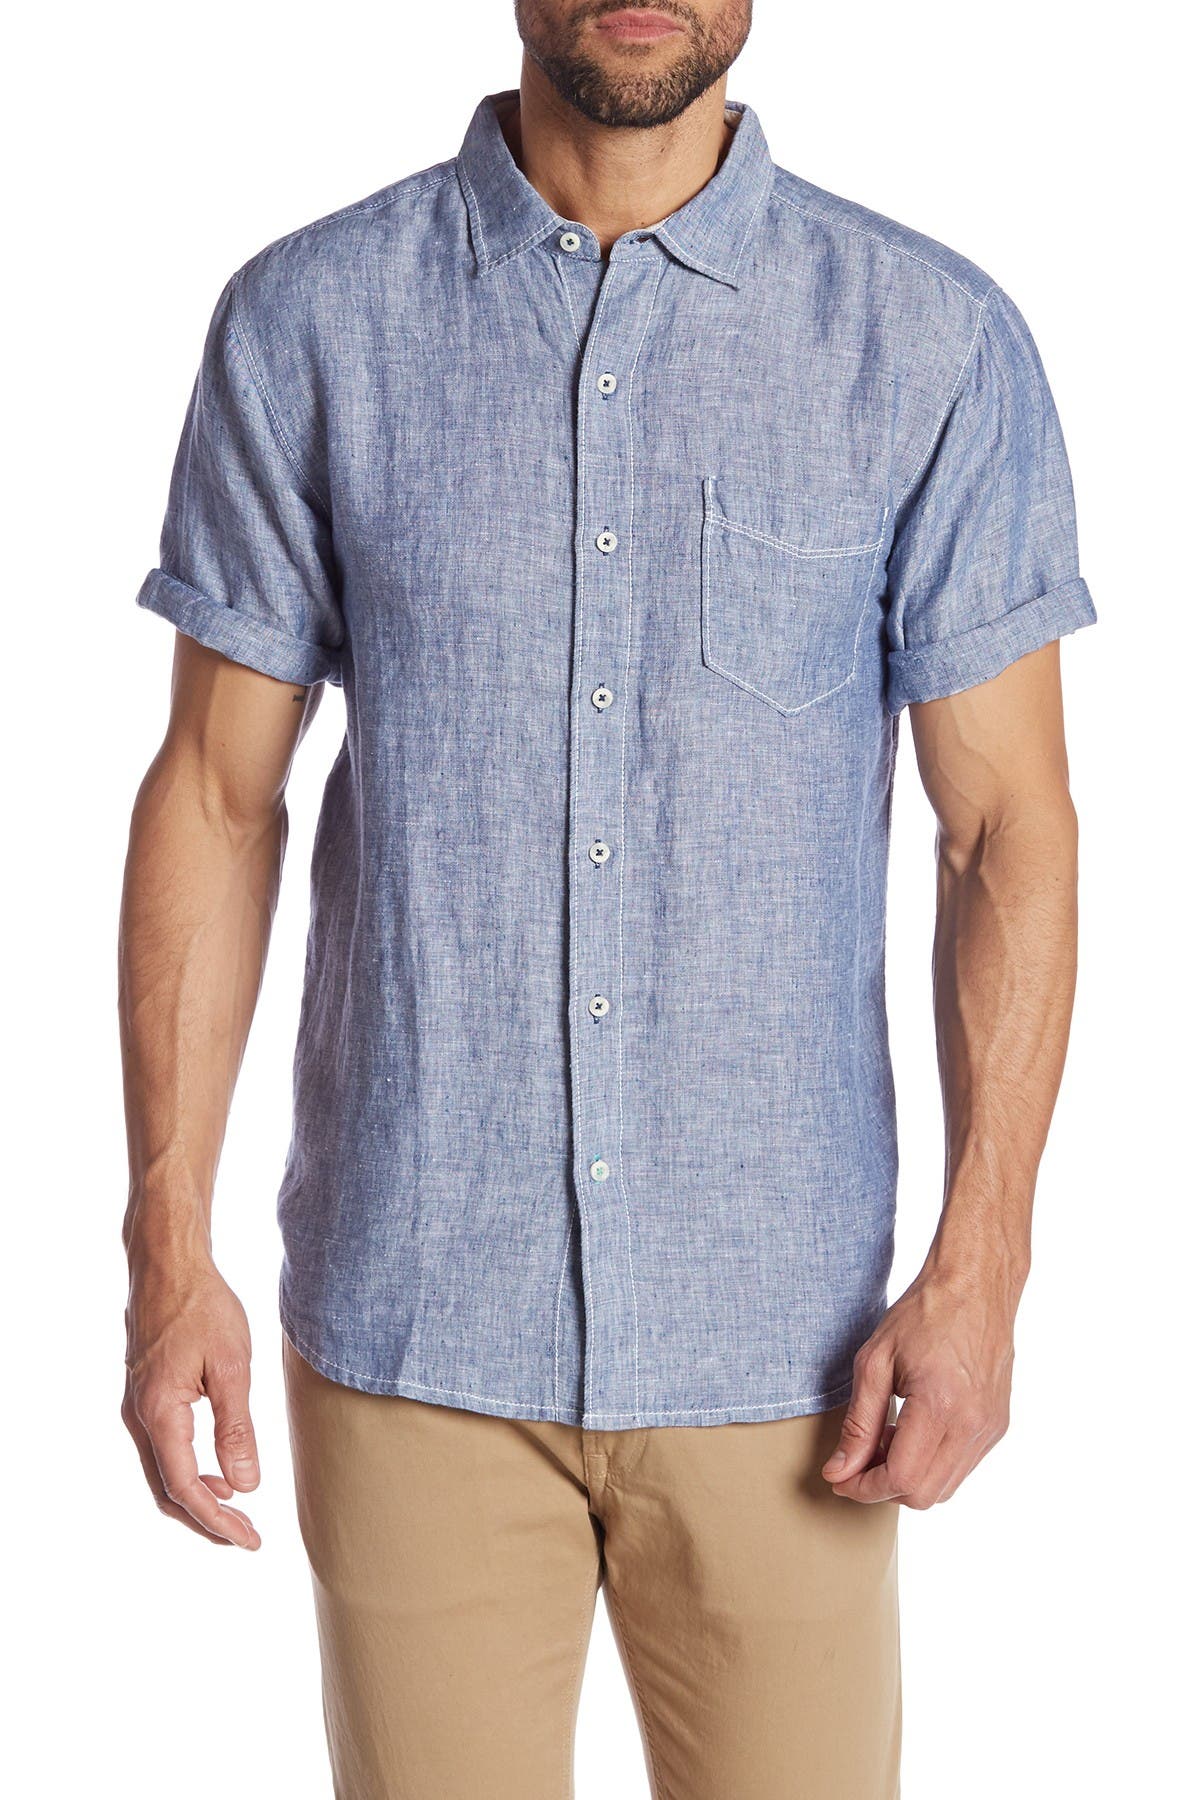 Cromoncent Mens Casual Summer Print Short Sleeve Plain Button Front Shirts